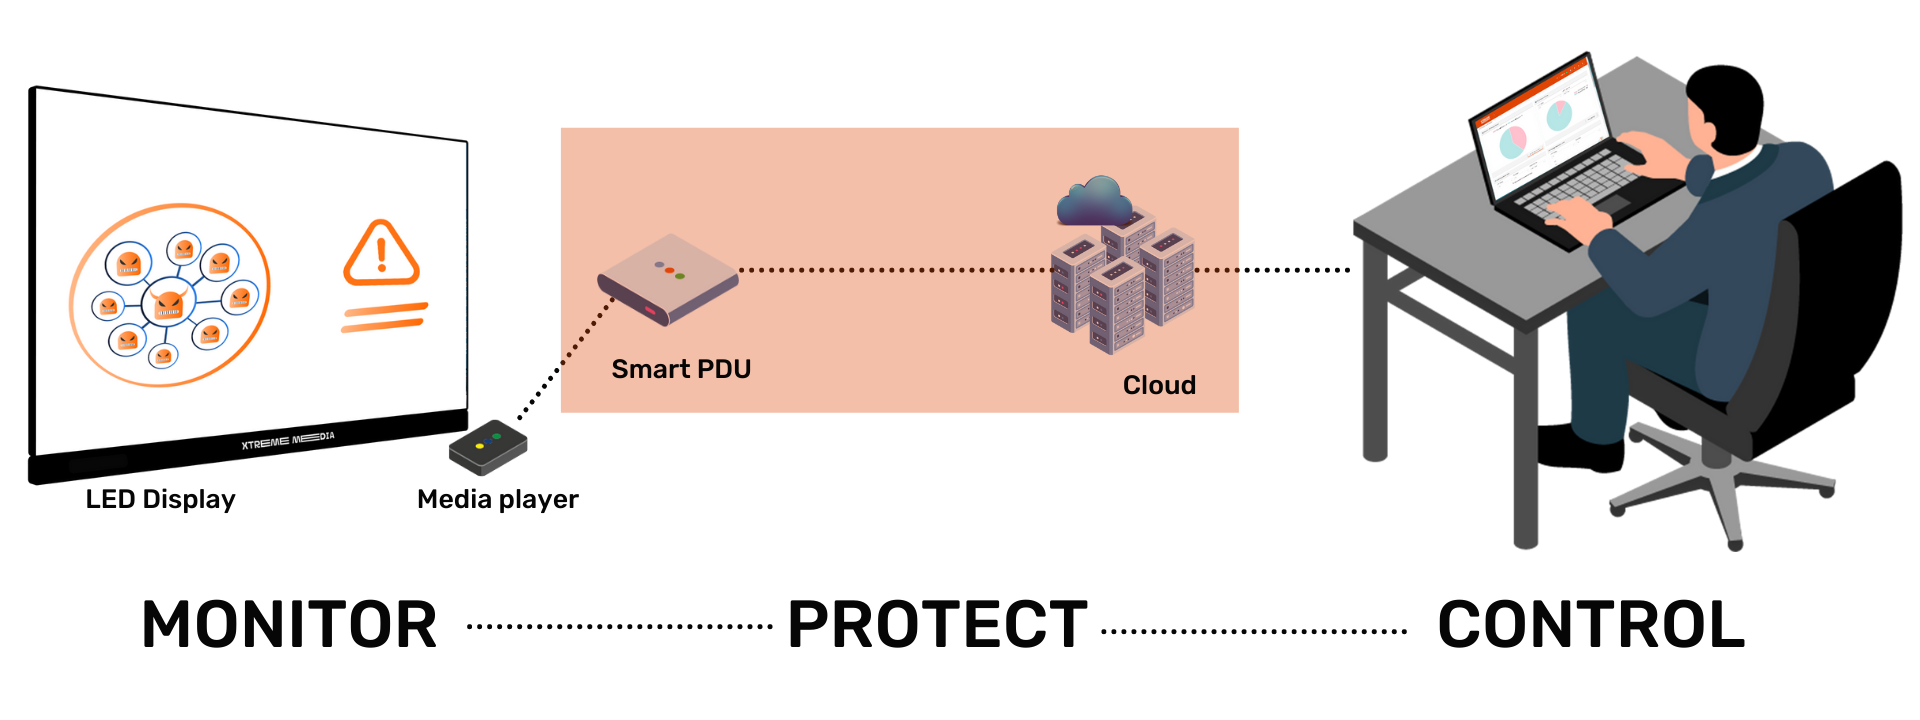 Vigilant Technology Smart PDU By Xtreme Media